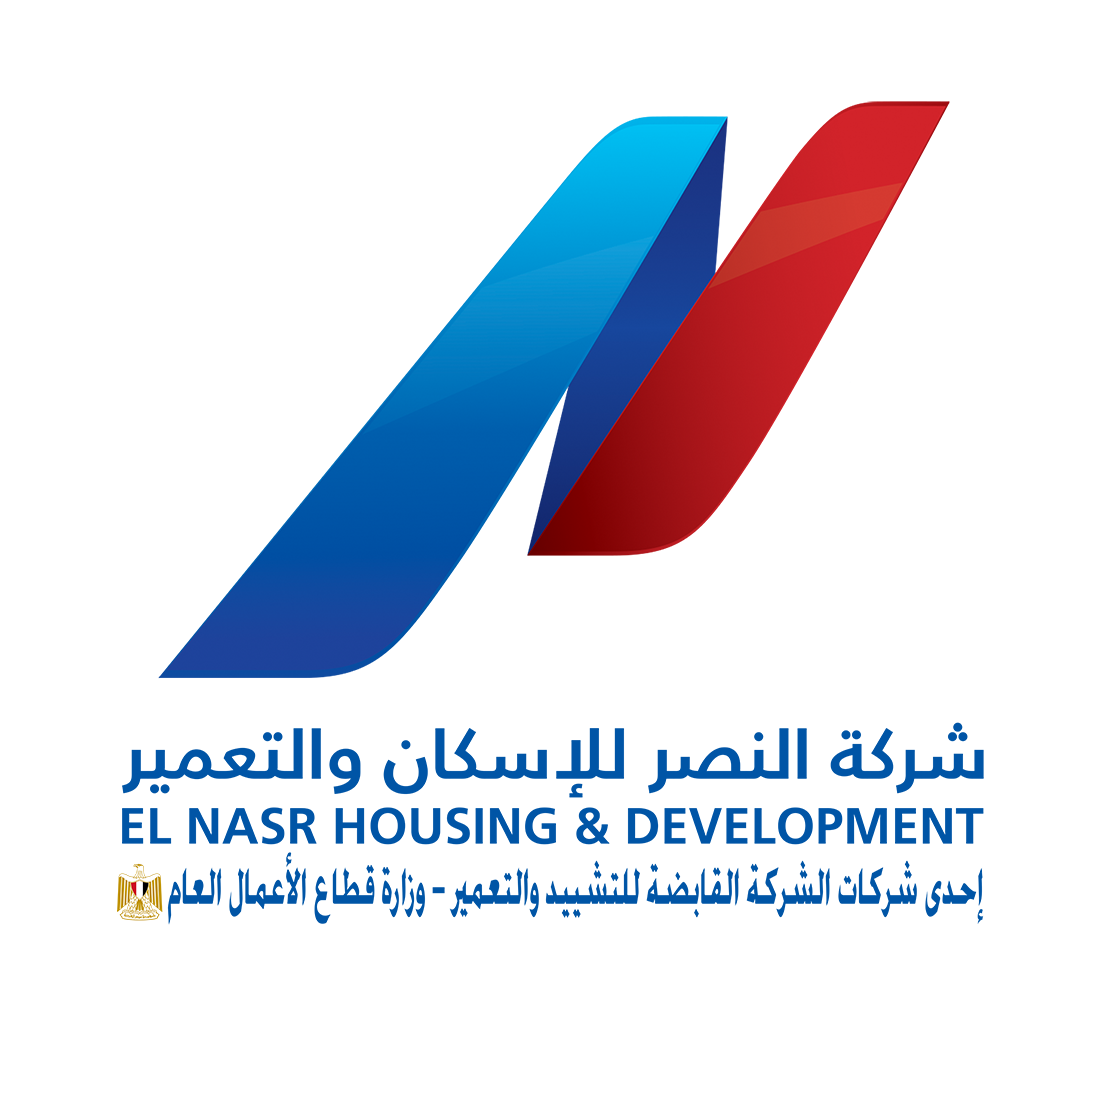 El Nasr Co. For Housing & Development - logo